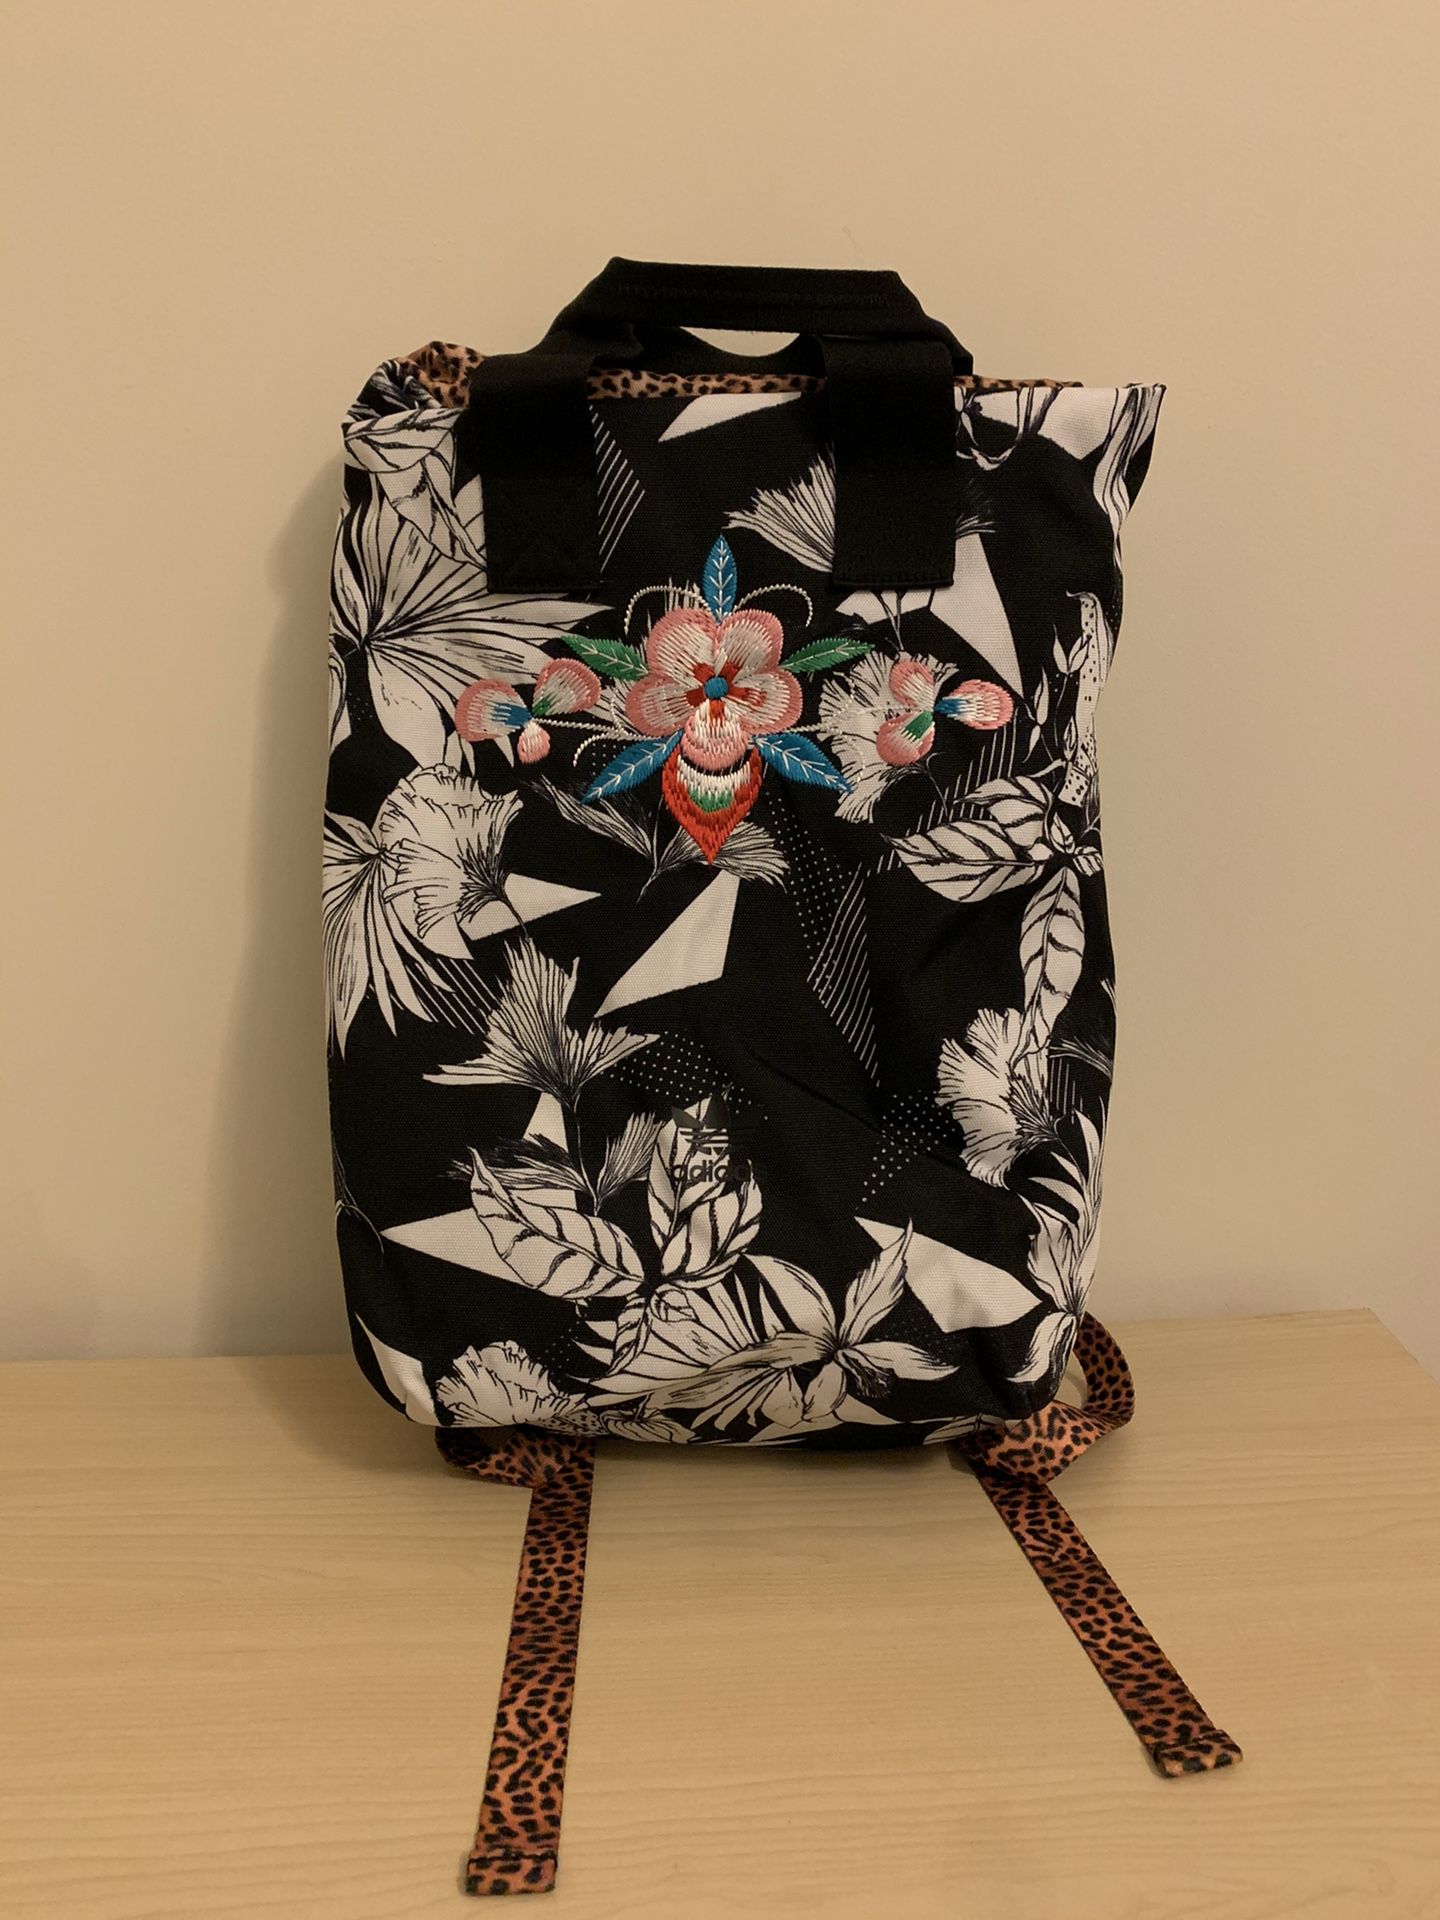 Adidas Woman’s Original-backpack With Laptop Pocket HandLuggage Gym Bag.